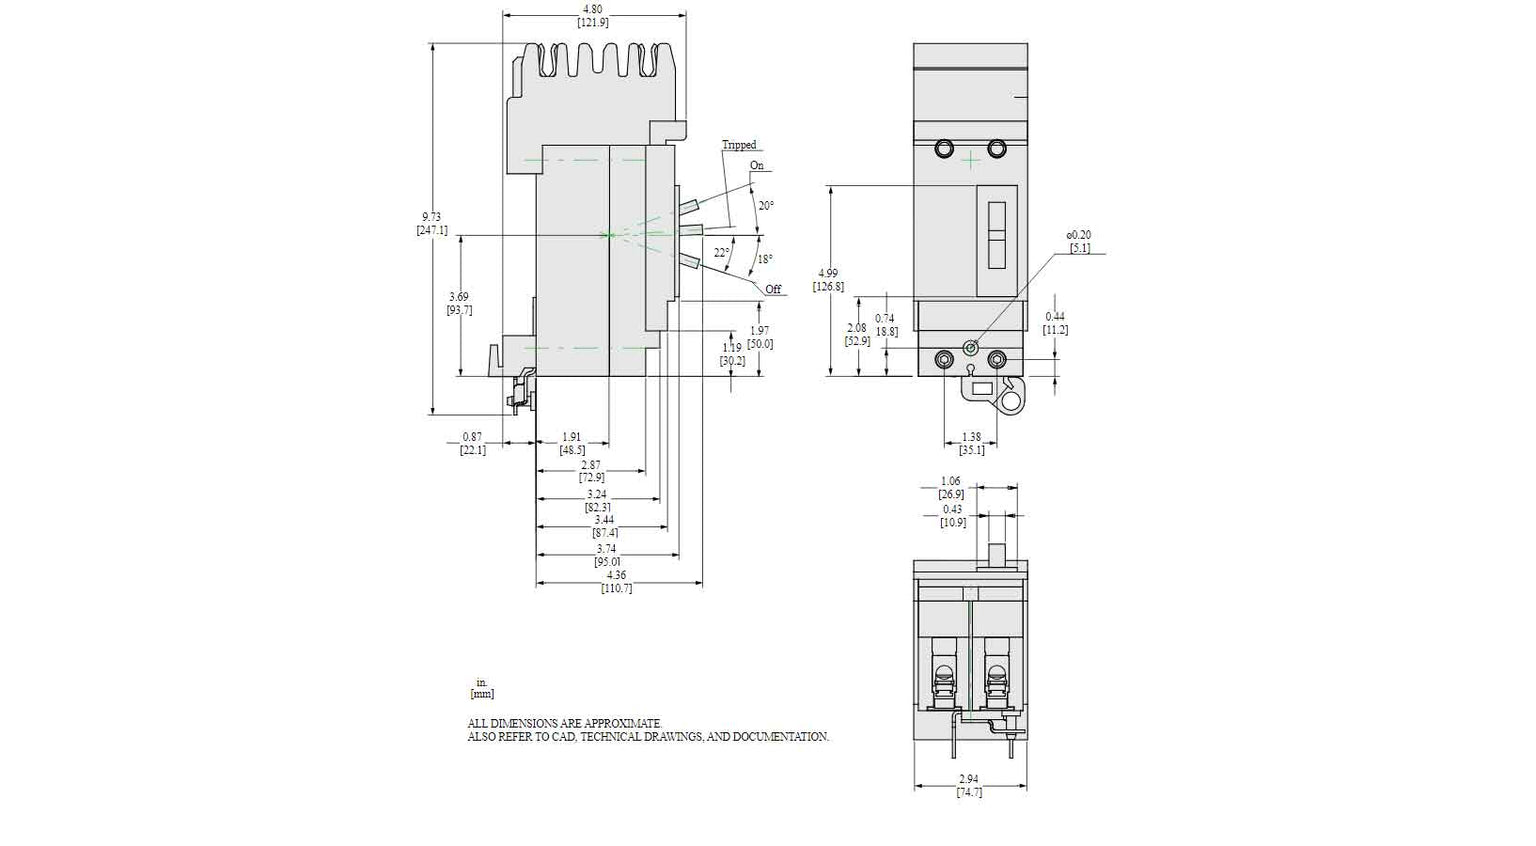 HDA260254 - Square D - Molded Case Circuit Breakers